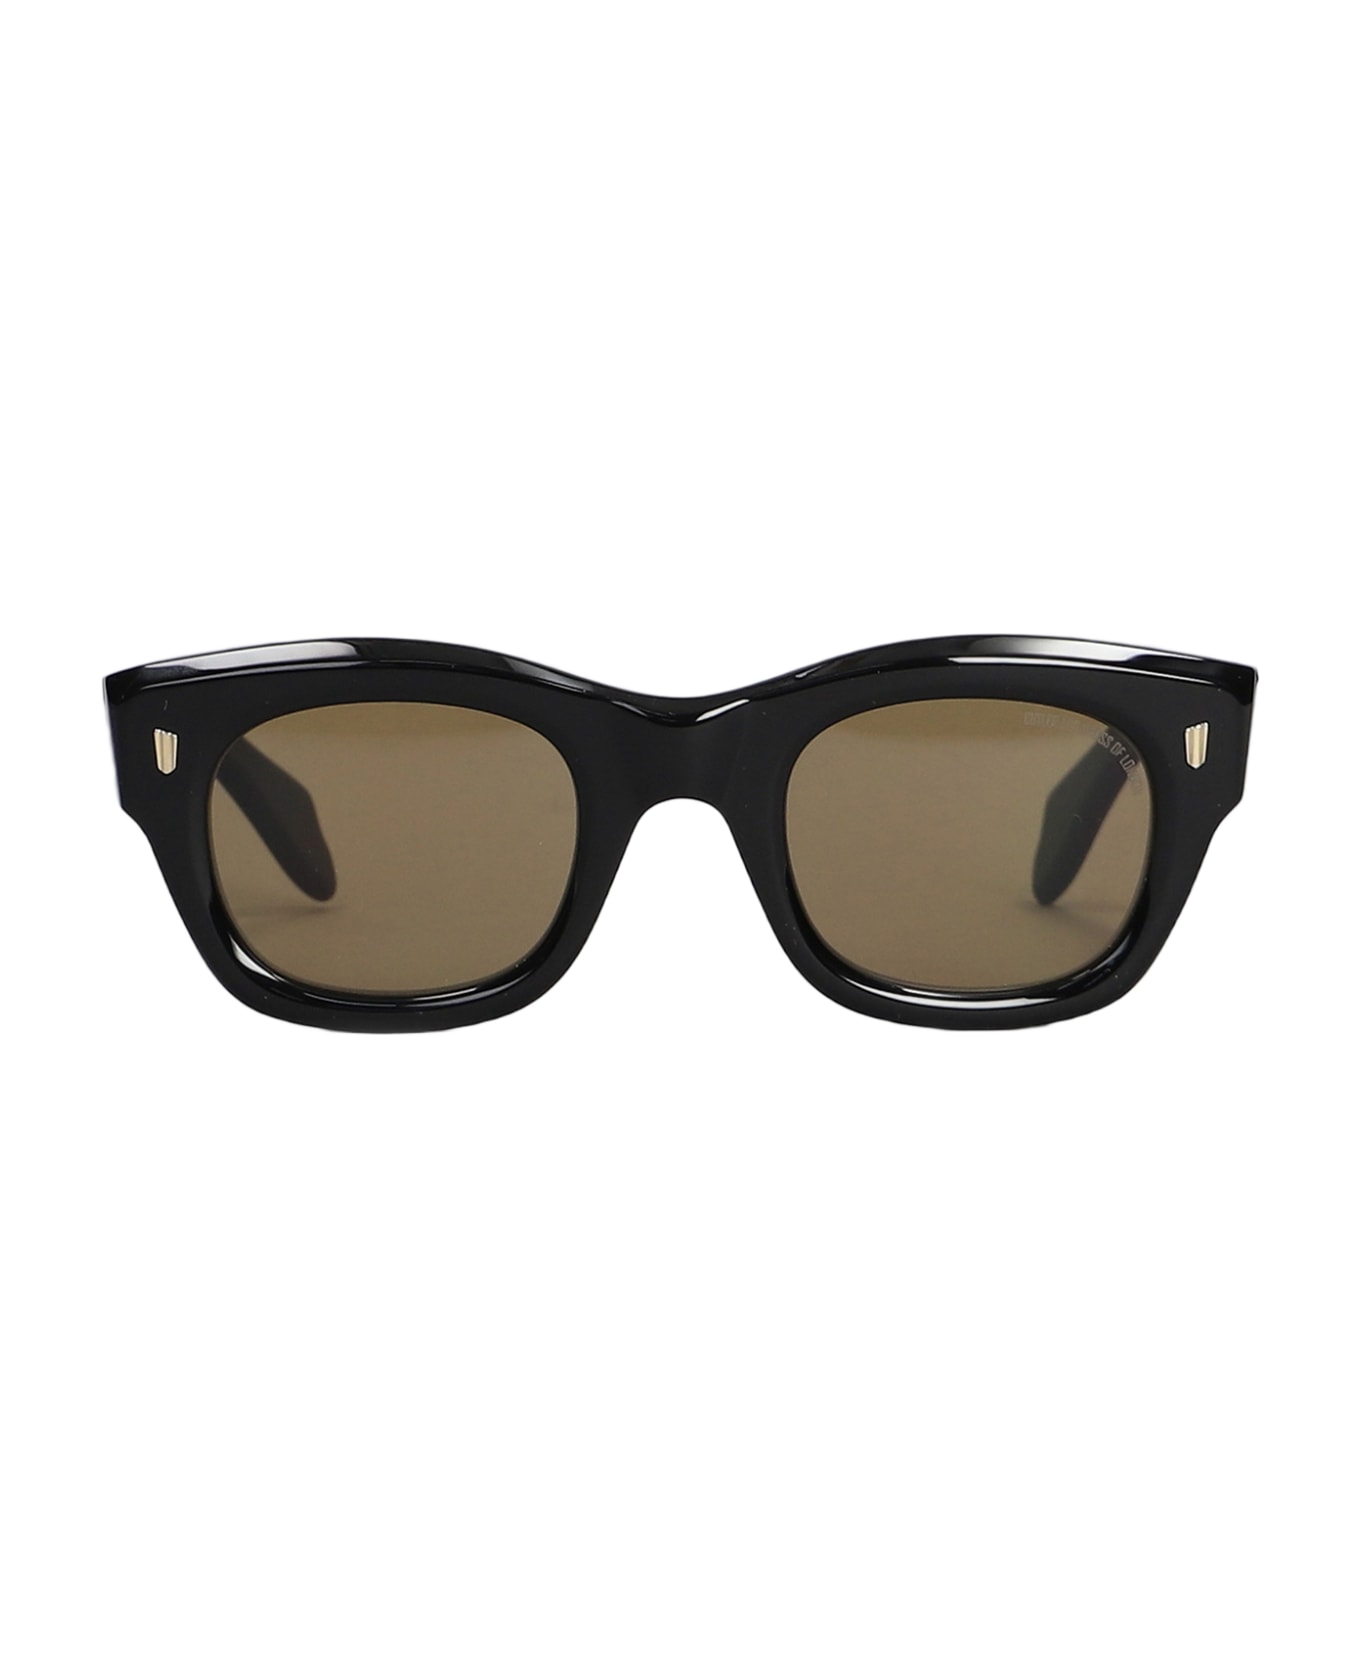 Cutler and Gross 9261 Sunglasses In Black Acetate - black